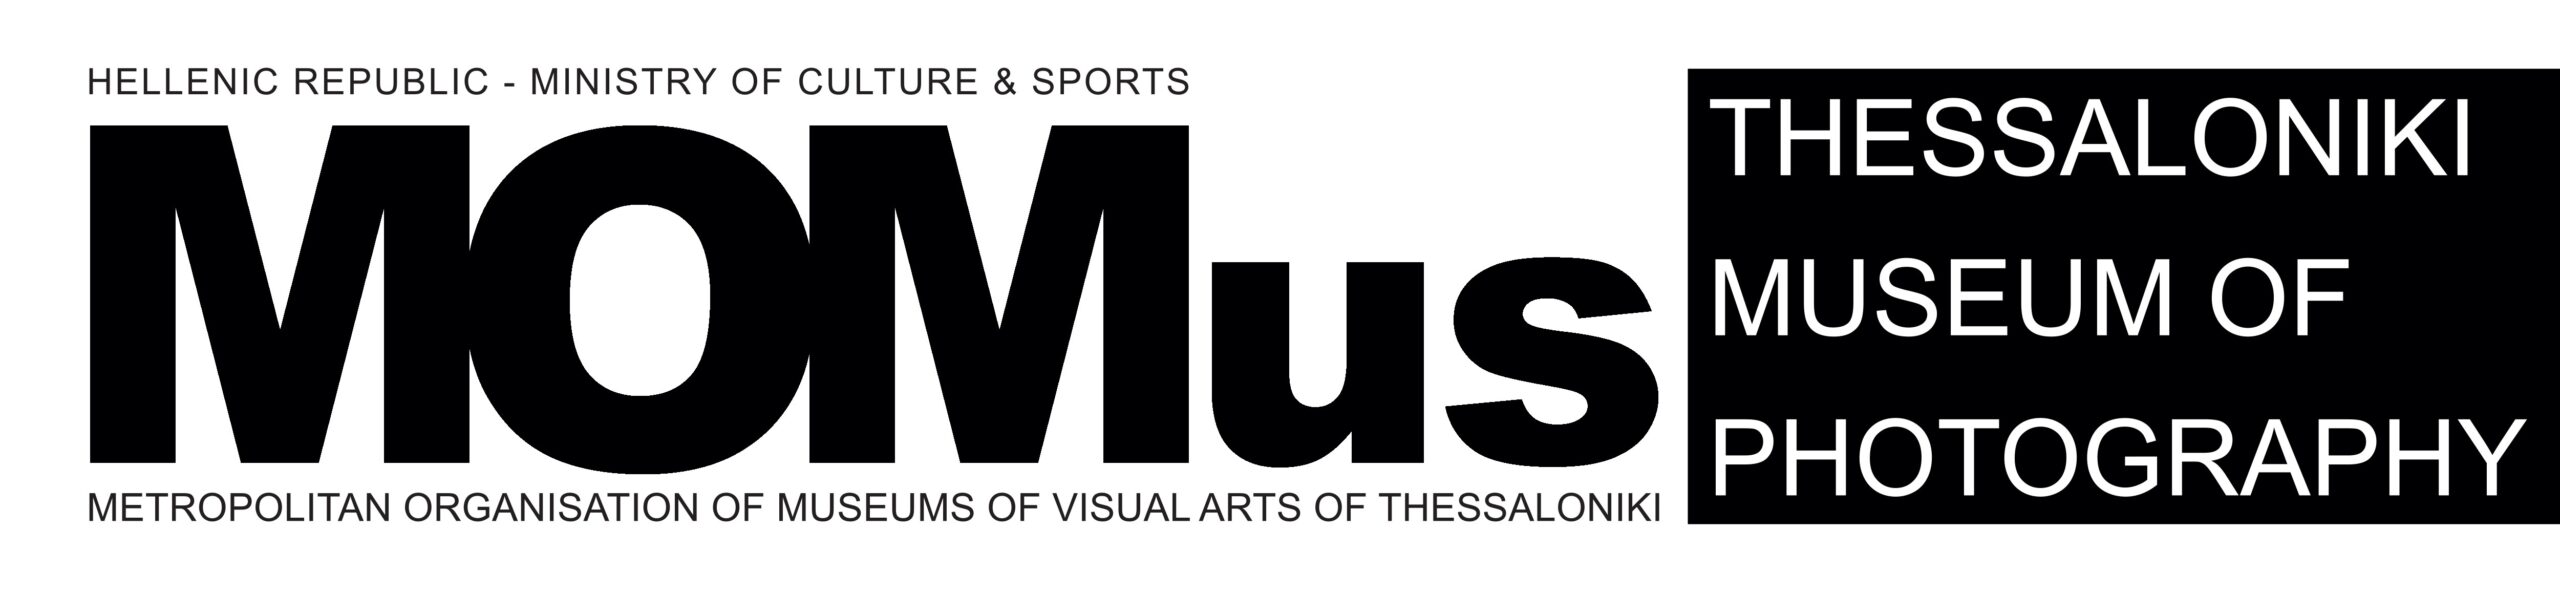 MOMus / Thessaloniki Museum of Photography Logo